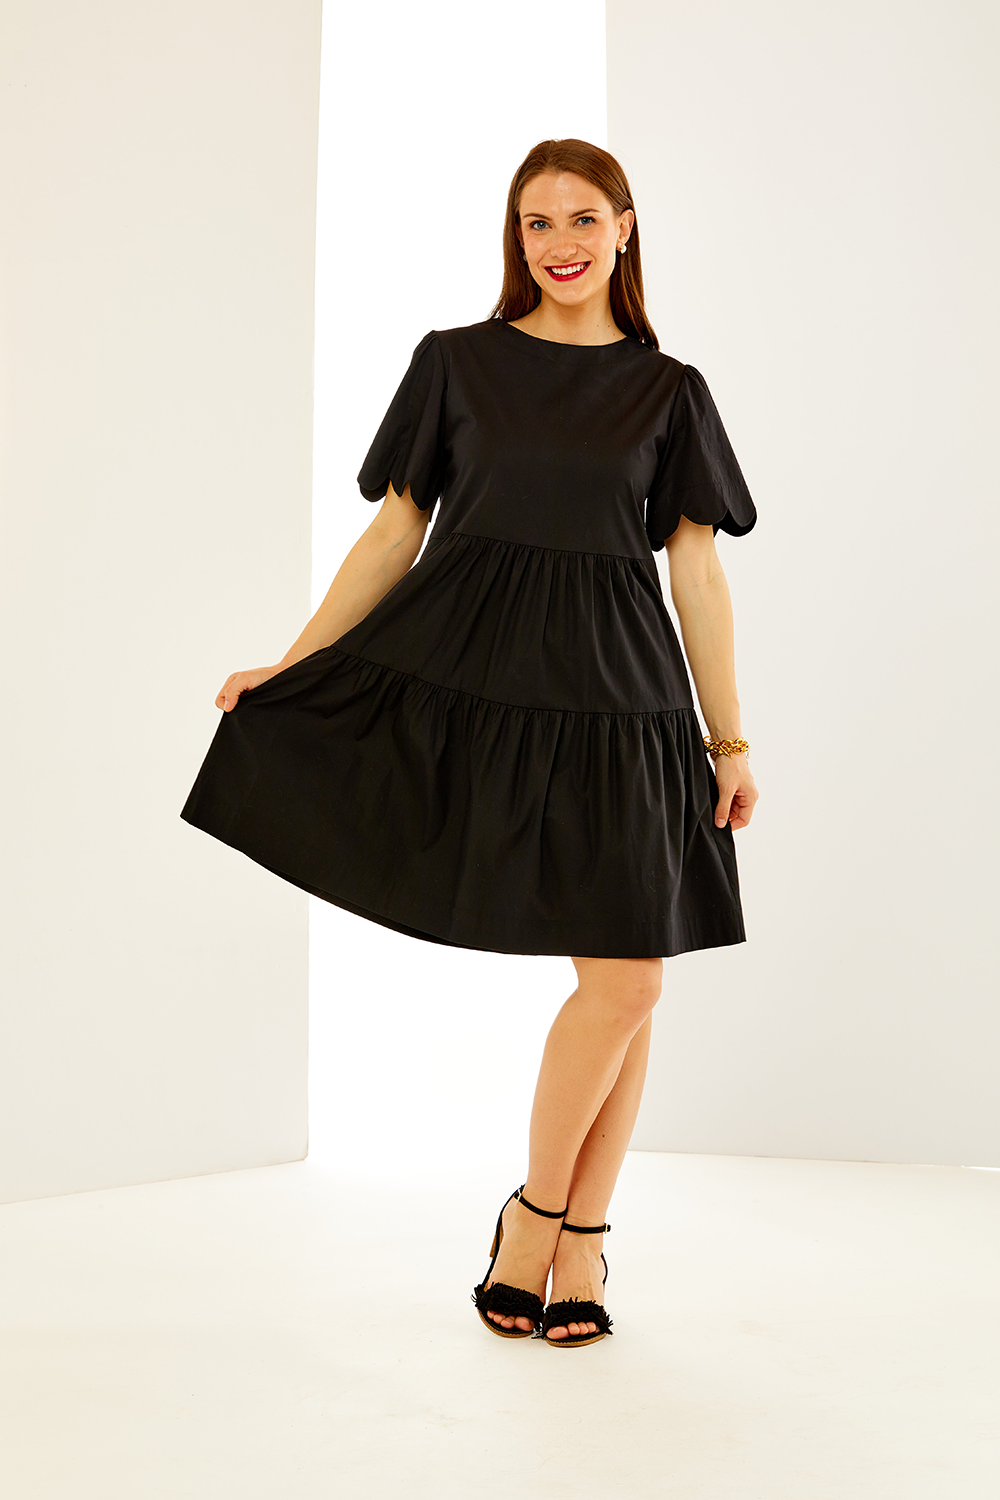 Woman in black scallop dress